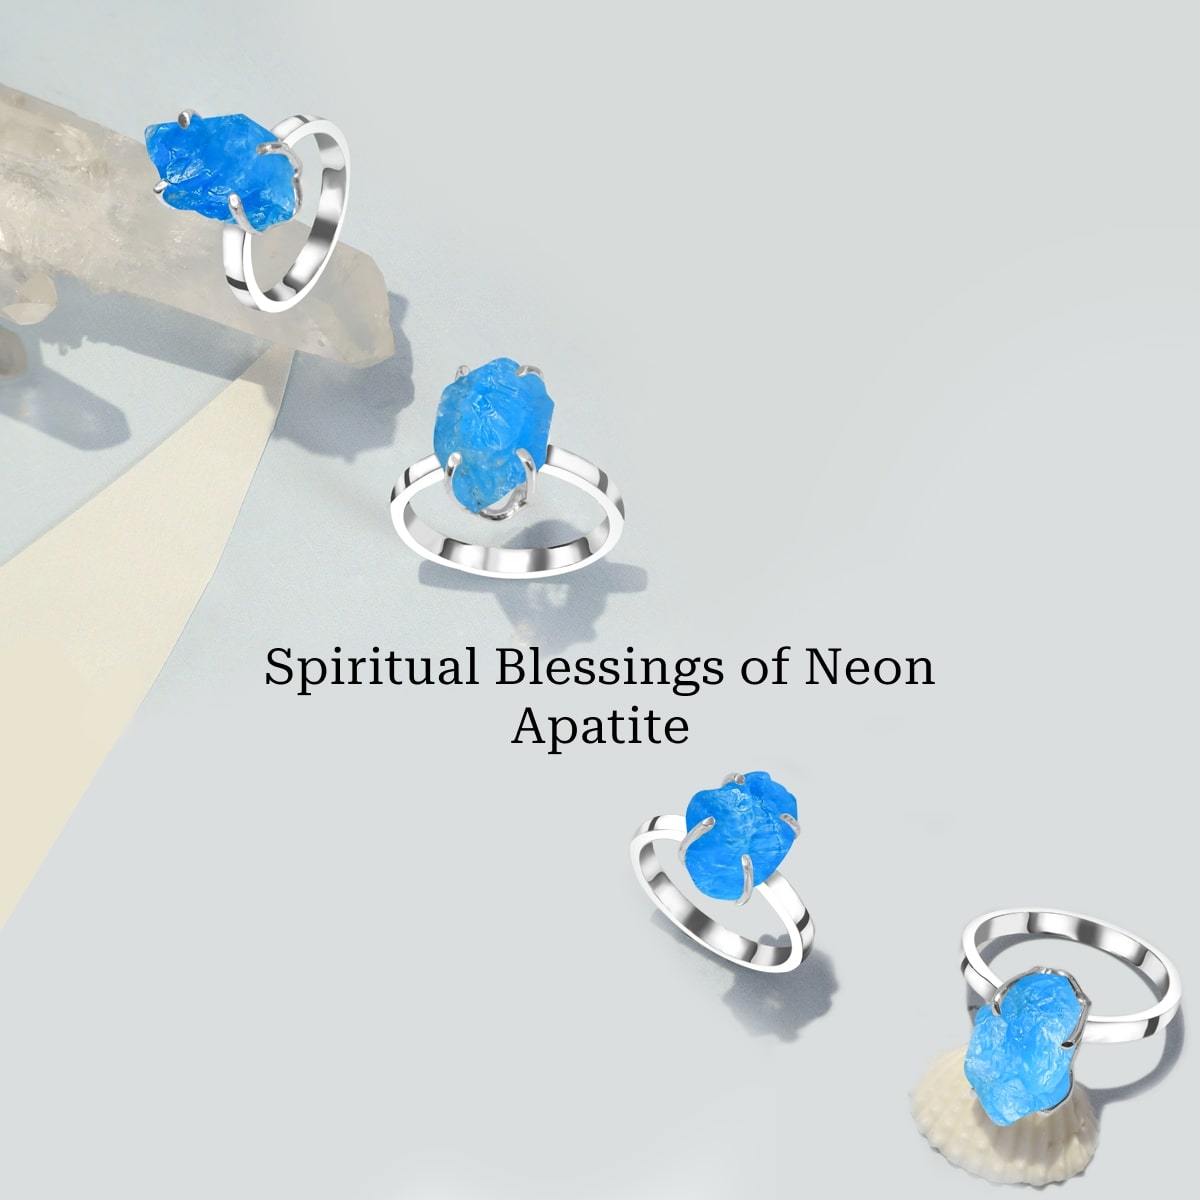 Neon Apatite Spiritual Properties and Benefits